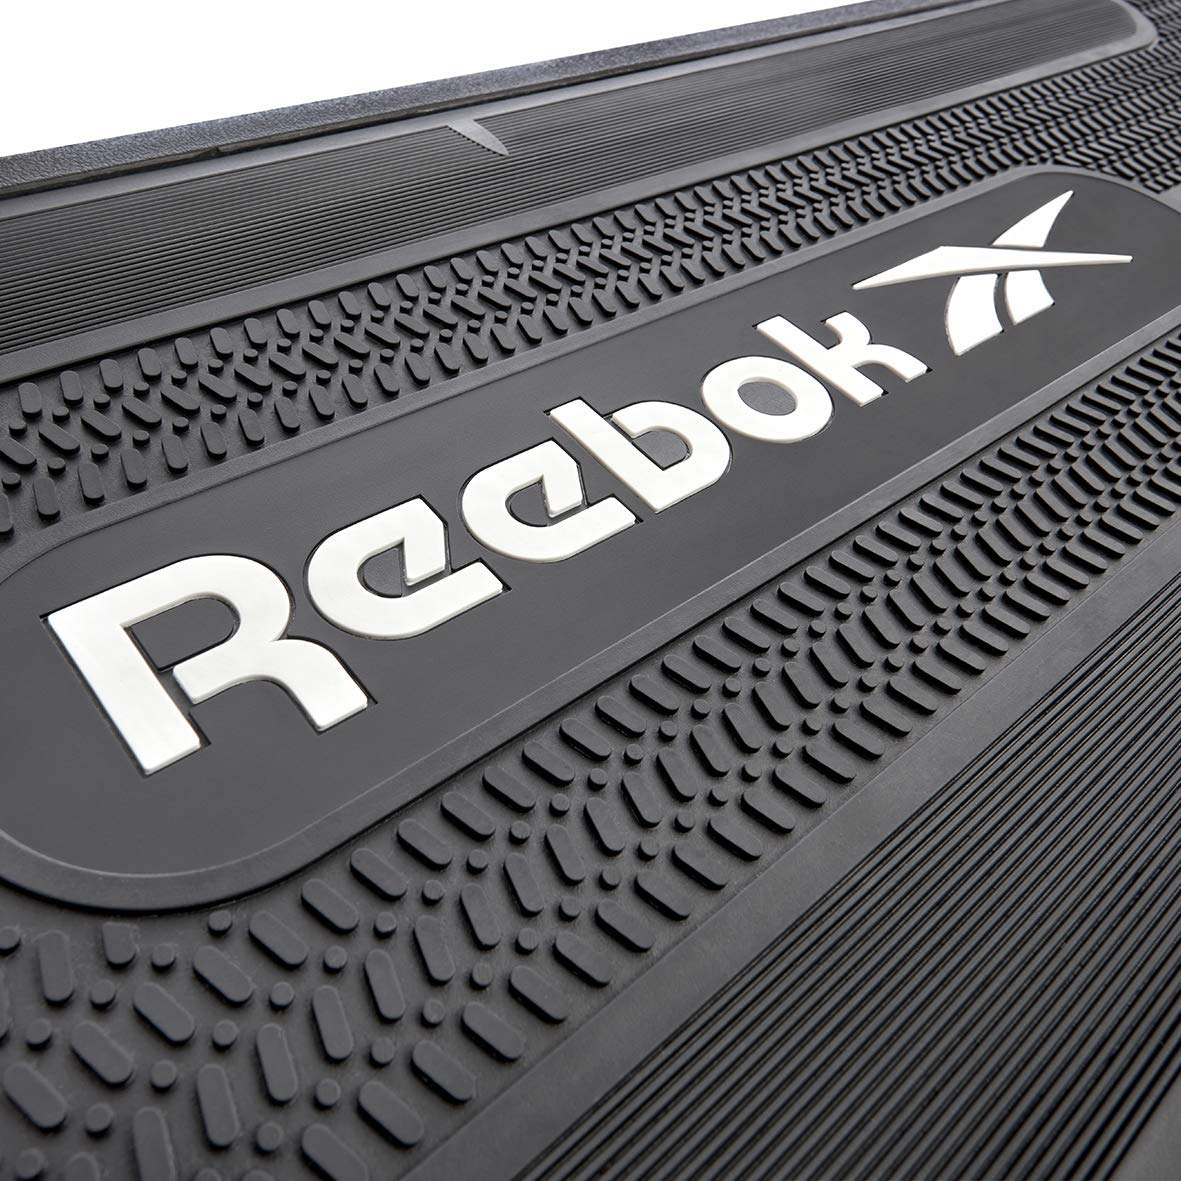 Reebok Professional Aerobic Step - White/Black - Best Price online Prokicksports.com